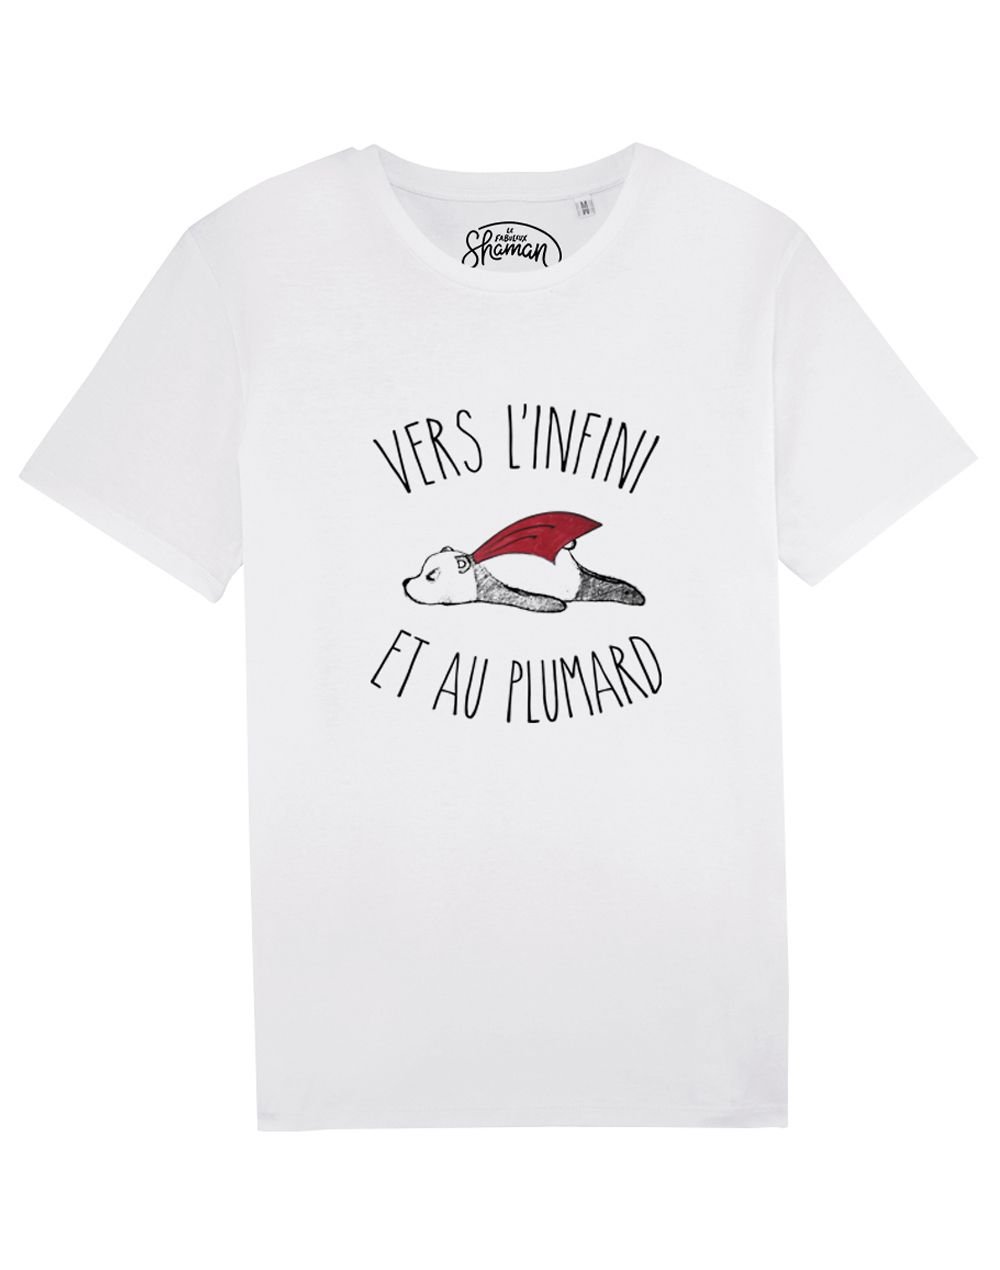 Tee-shirt "Vers l'infini et au plumard"